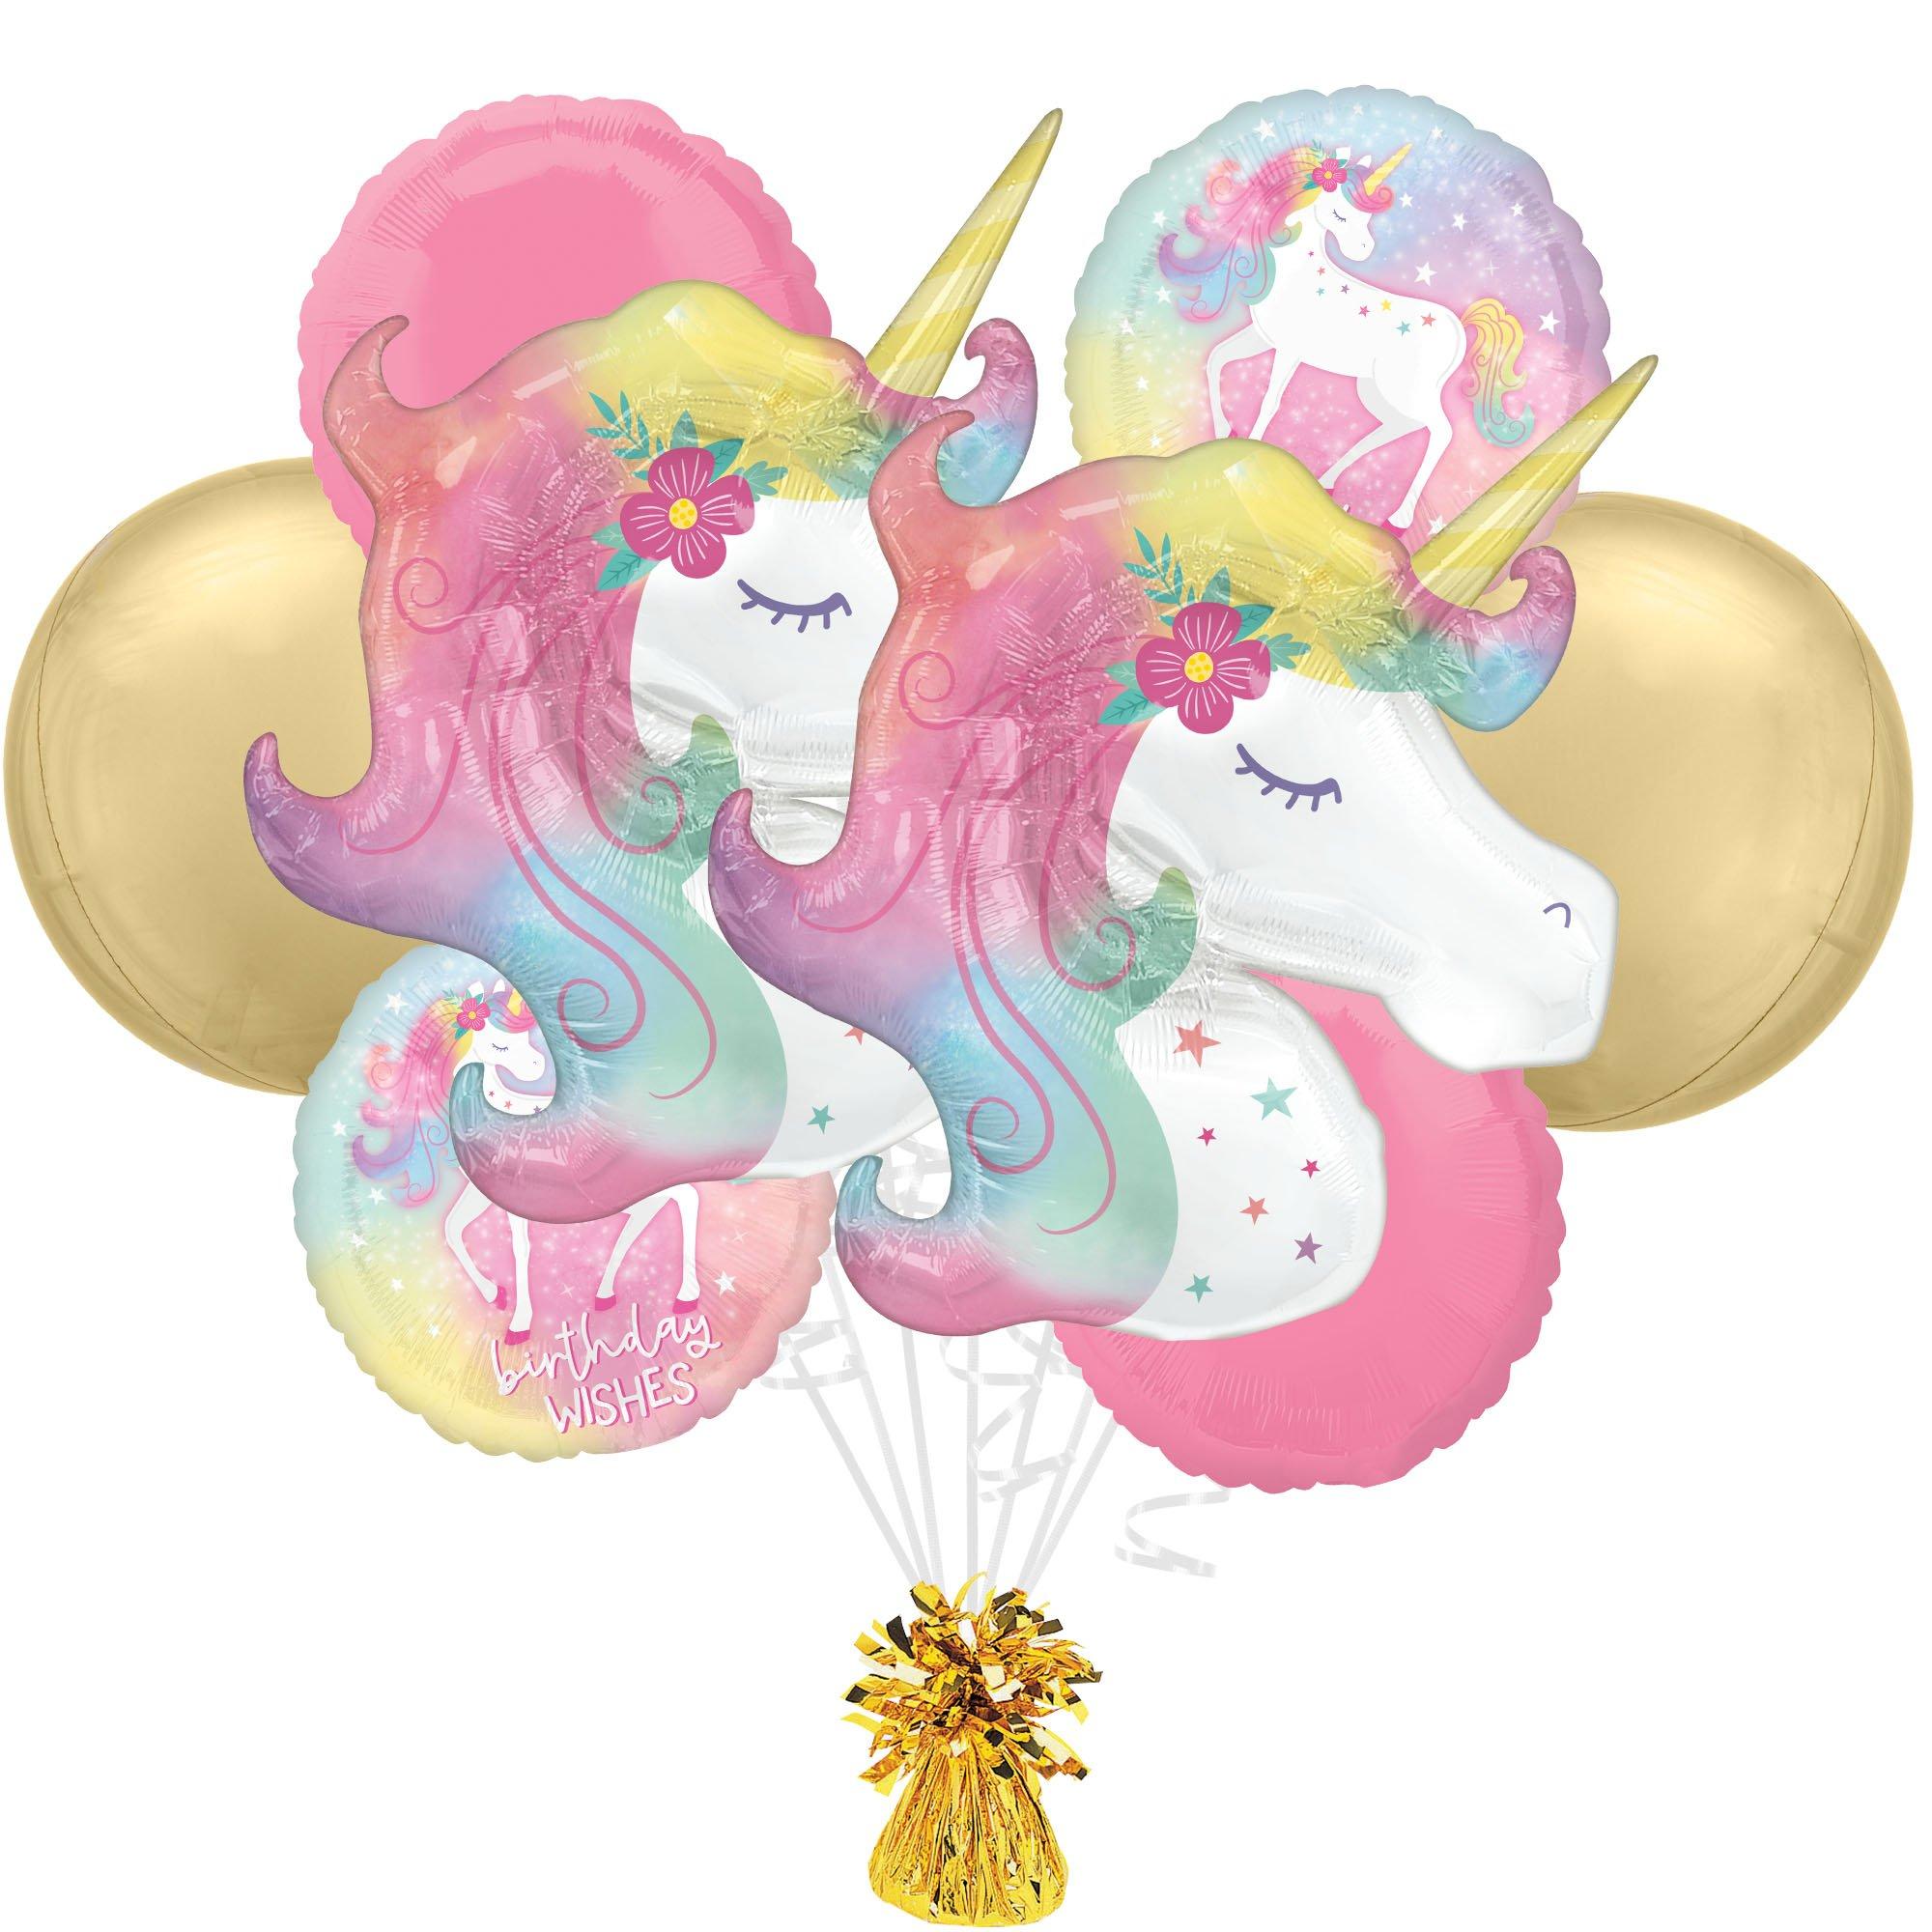 20 Magical Unicorn Party Ideas - BalloonsOnline - CA